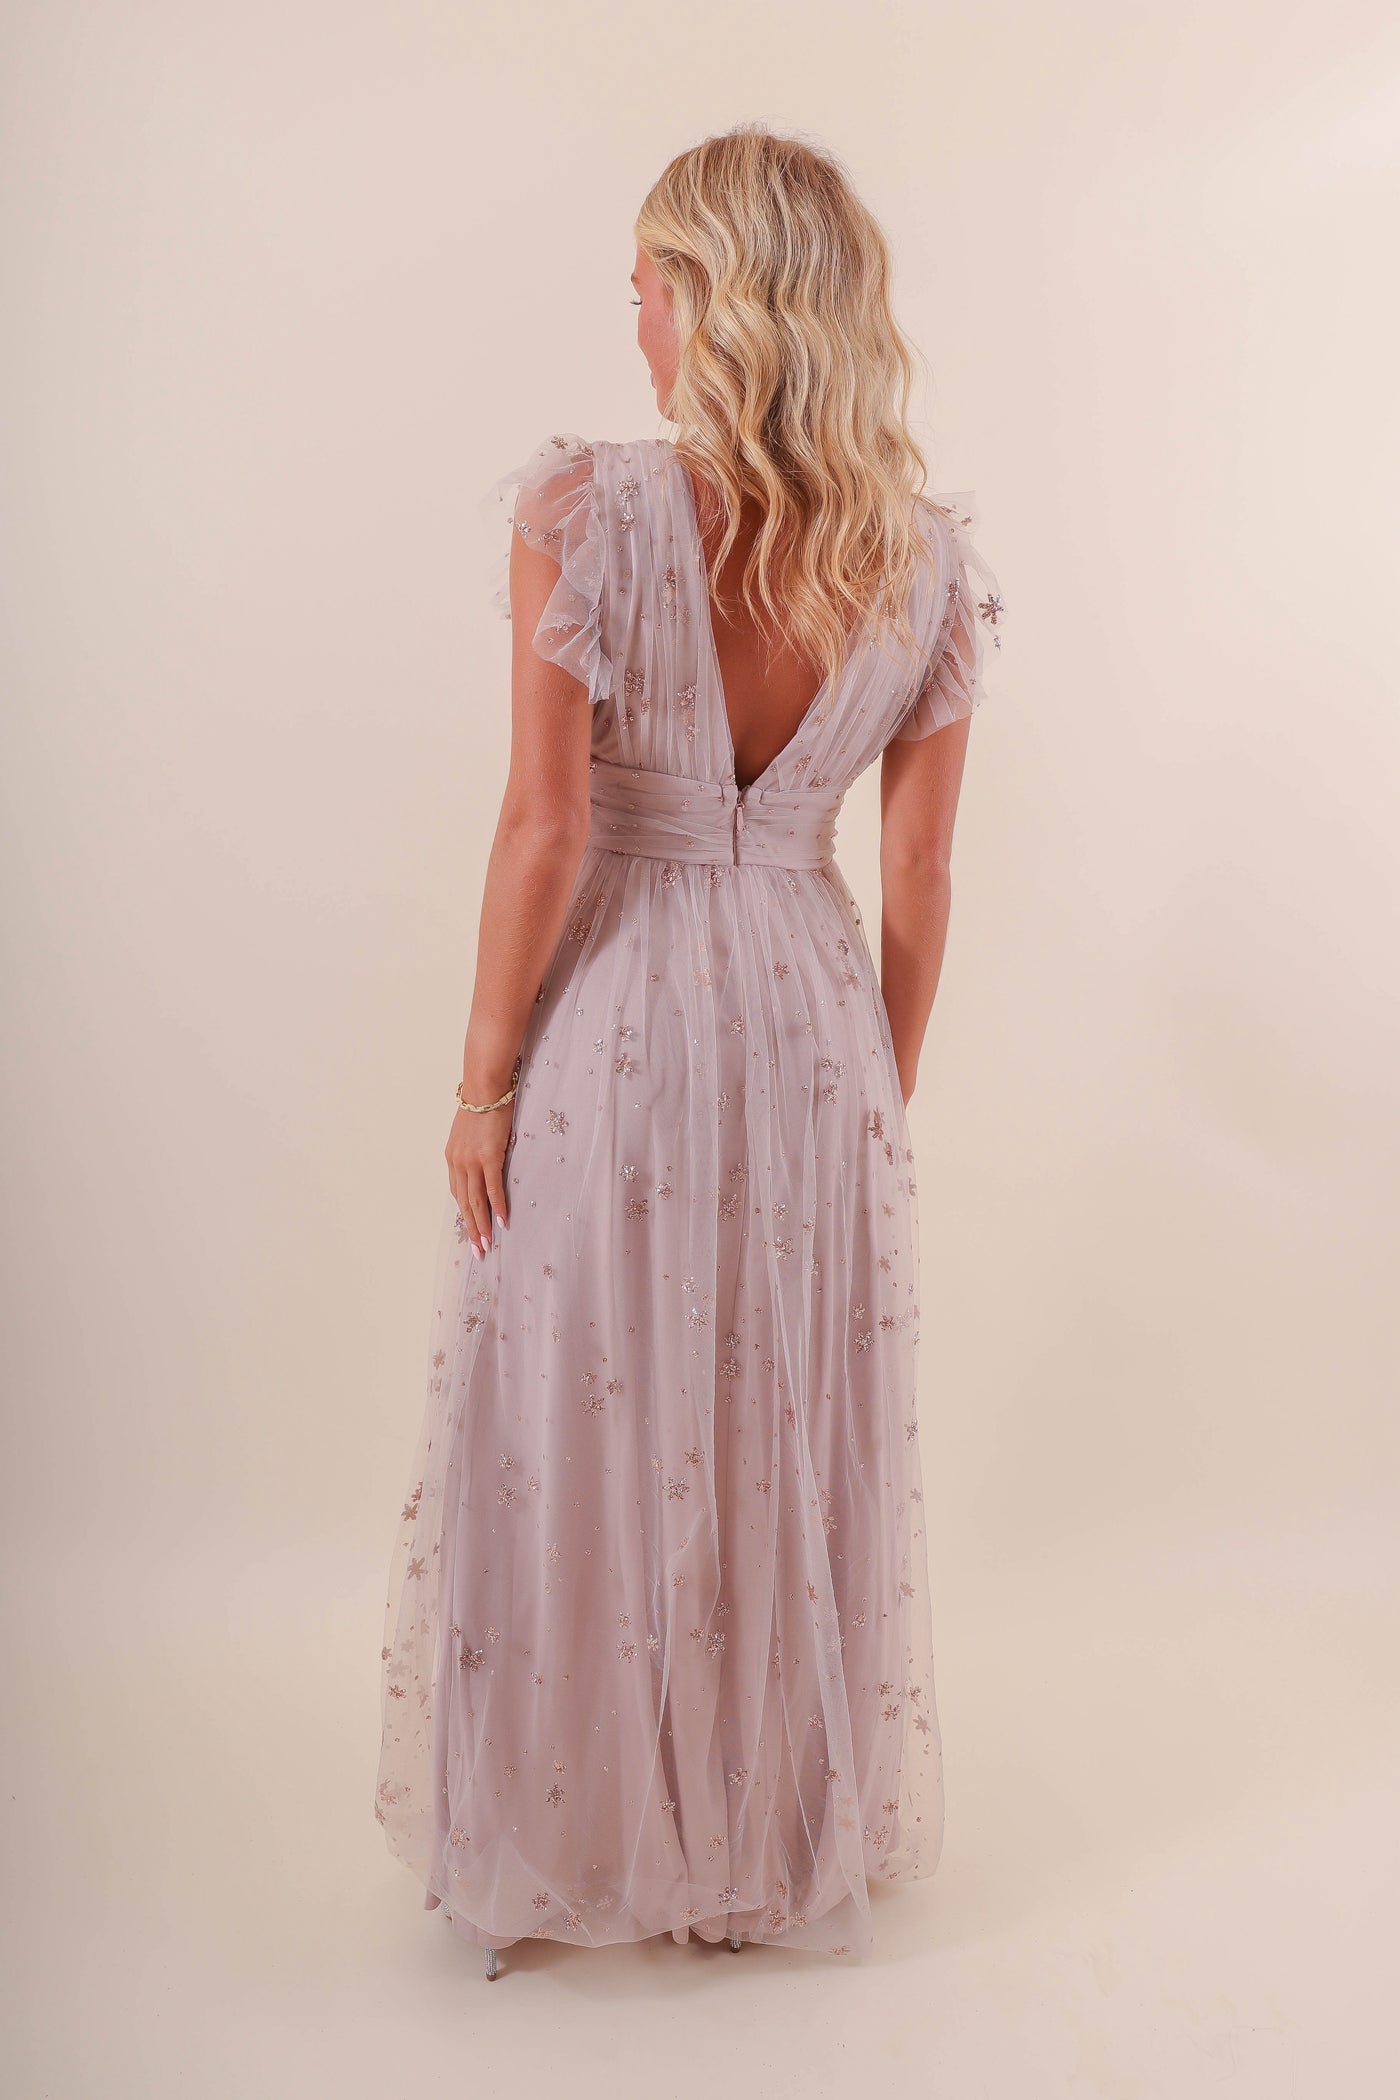 Tulle Maxi Dress- Blush Pink Tulle Dress- Women's Formal Dresses